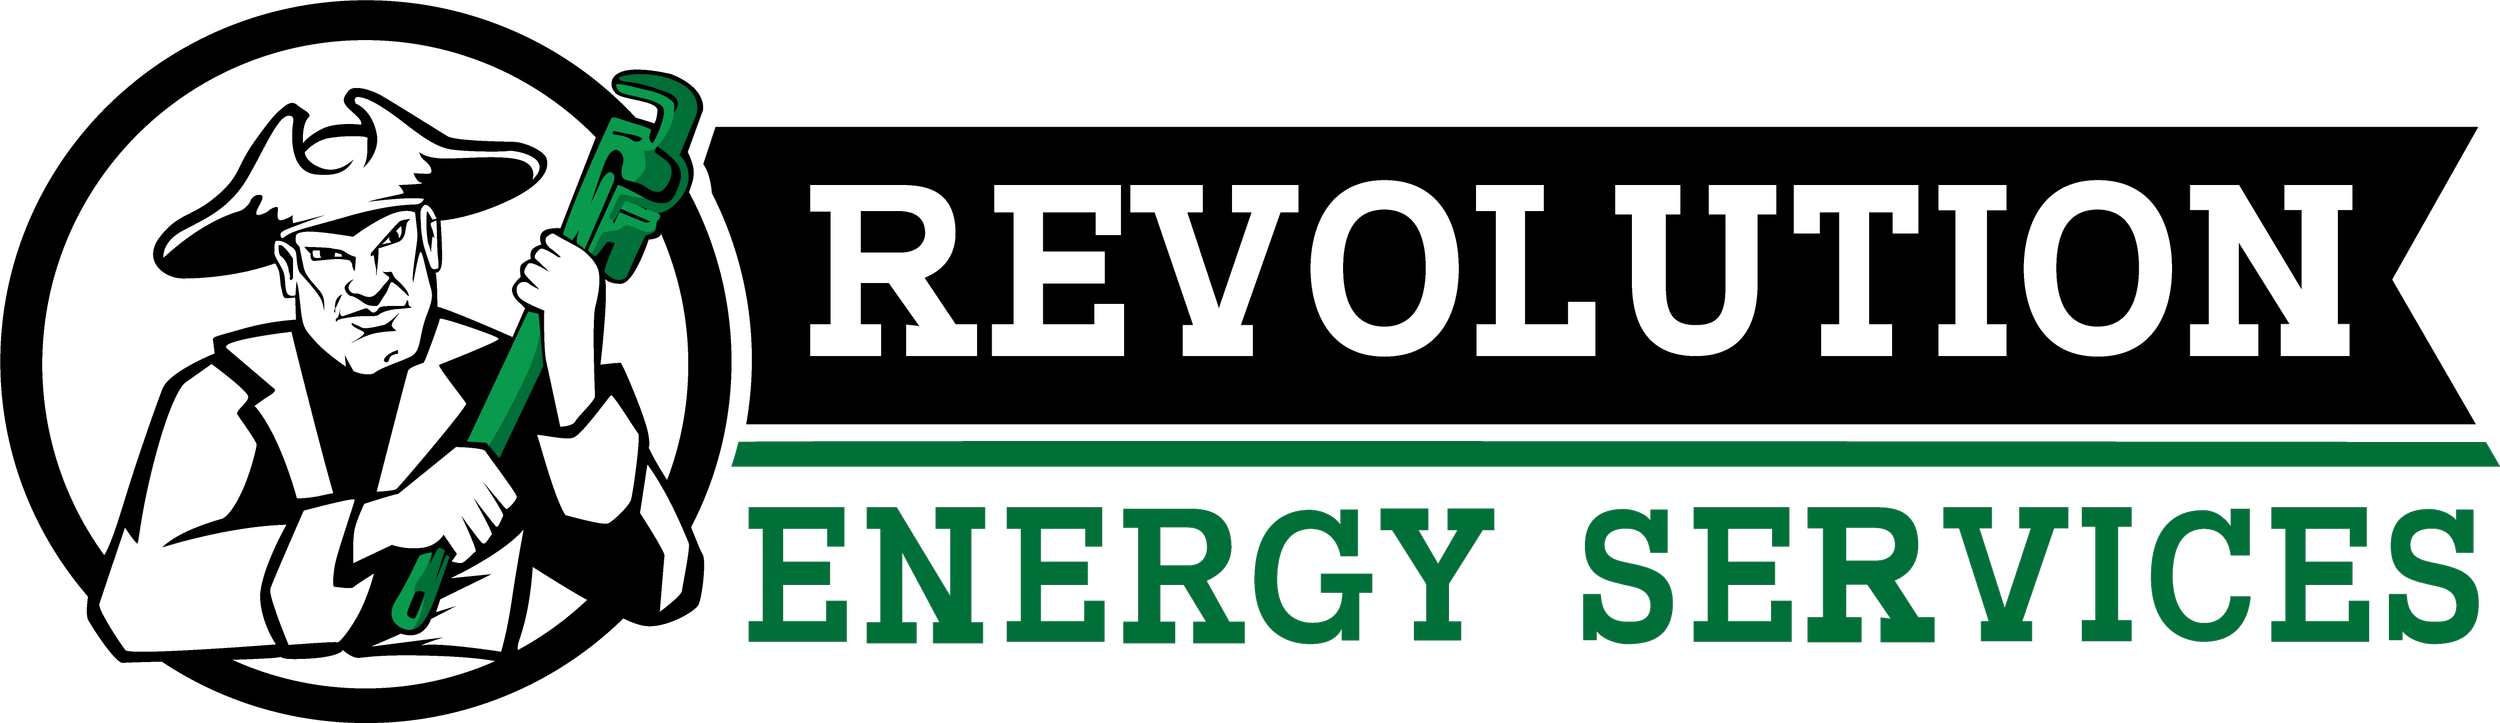 Revolution Energy Services logo.png